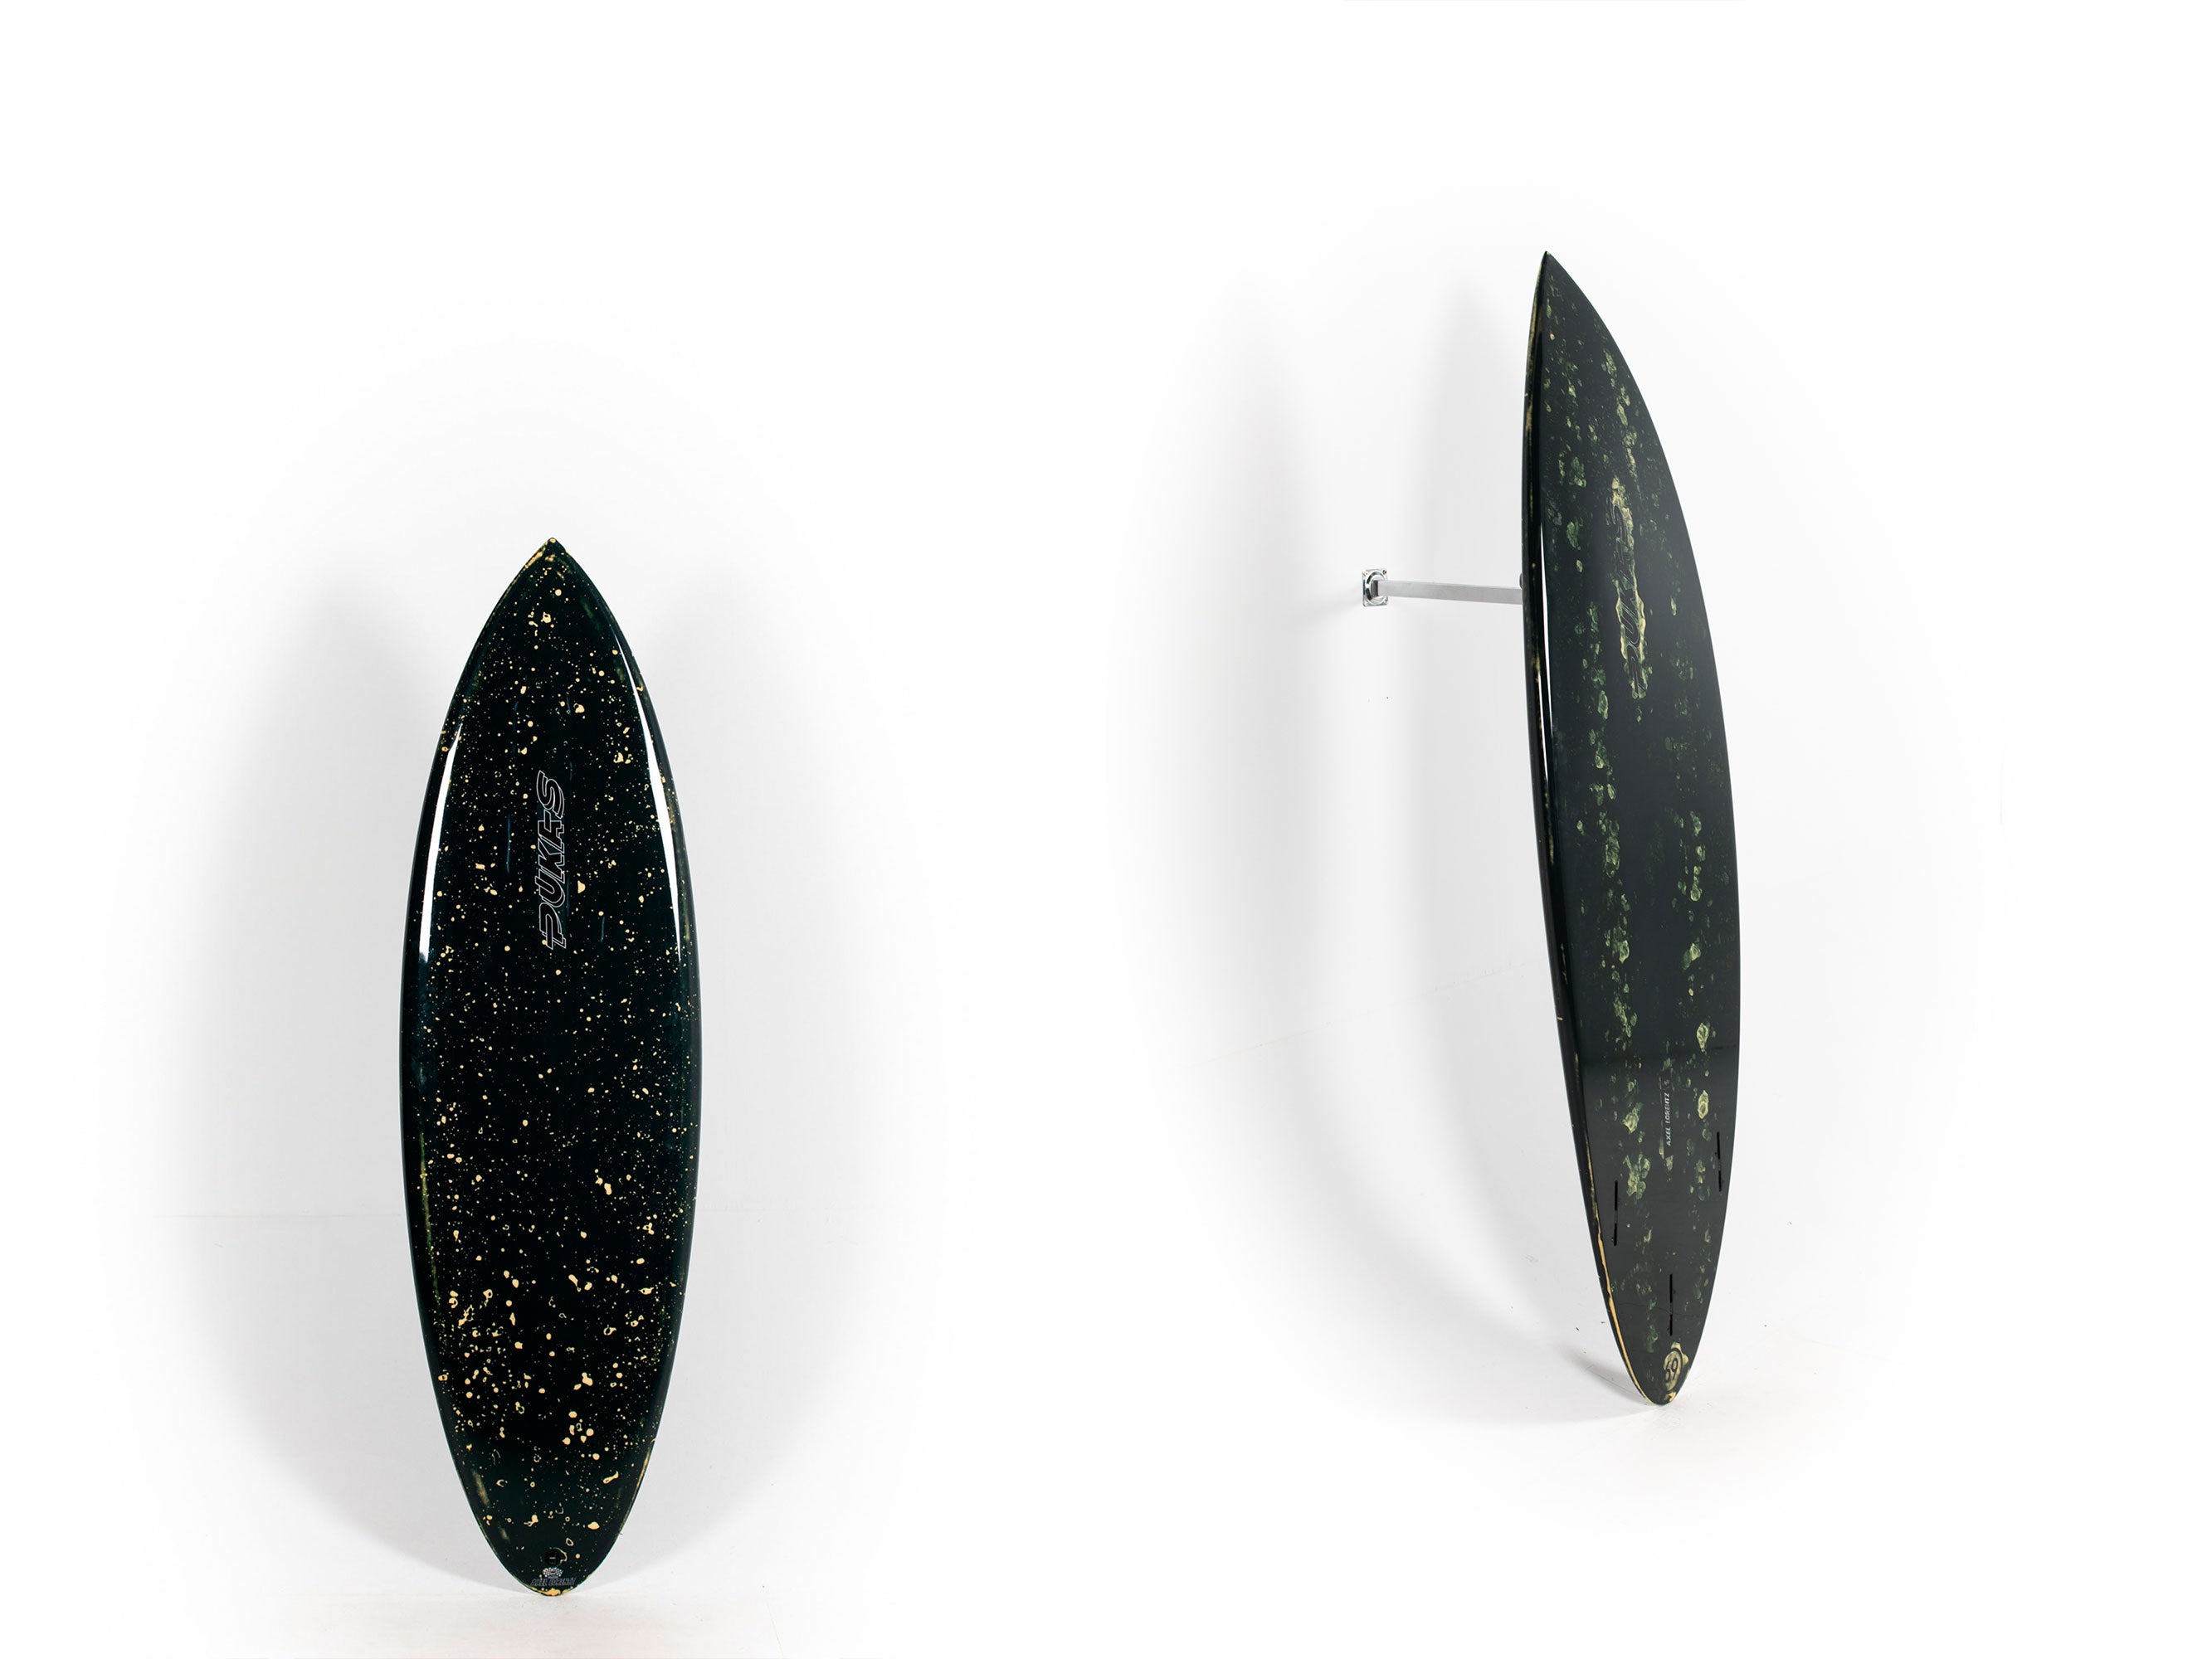 Pukas Surfboard - 69ER PRO by Axel Lorentz - 5’10” x 20,25 x 2,5 - 31,71L - AX08903